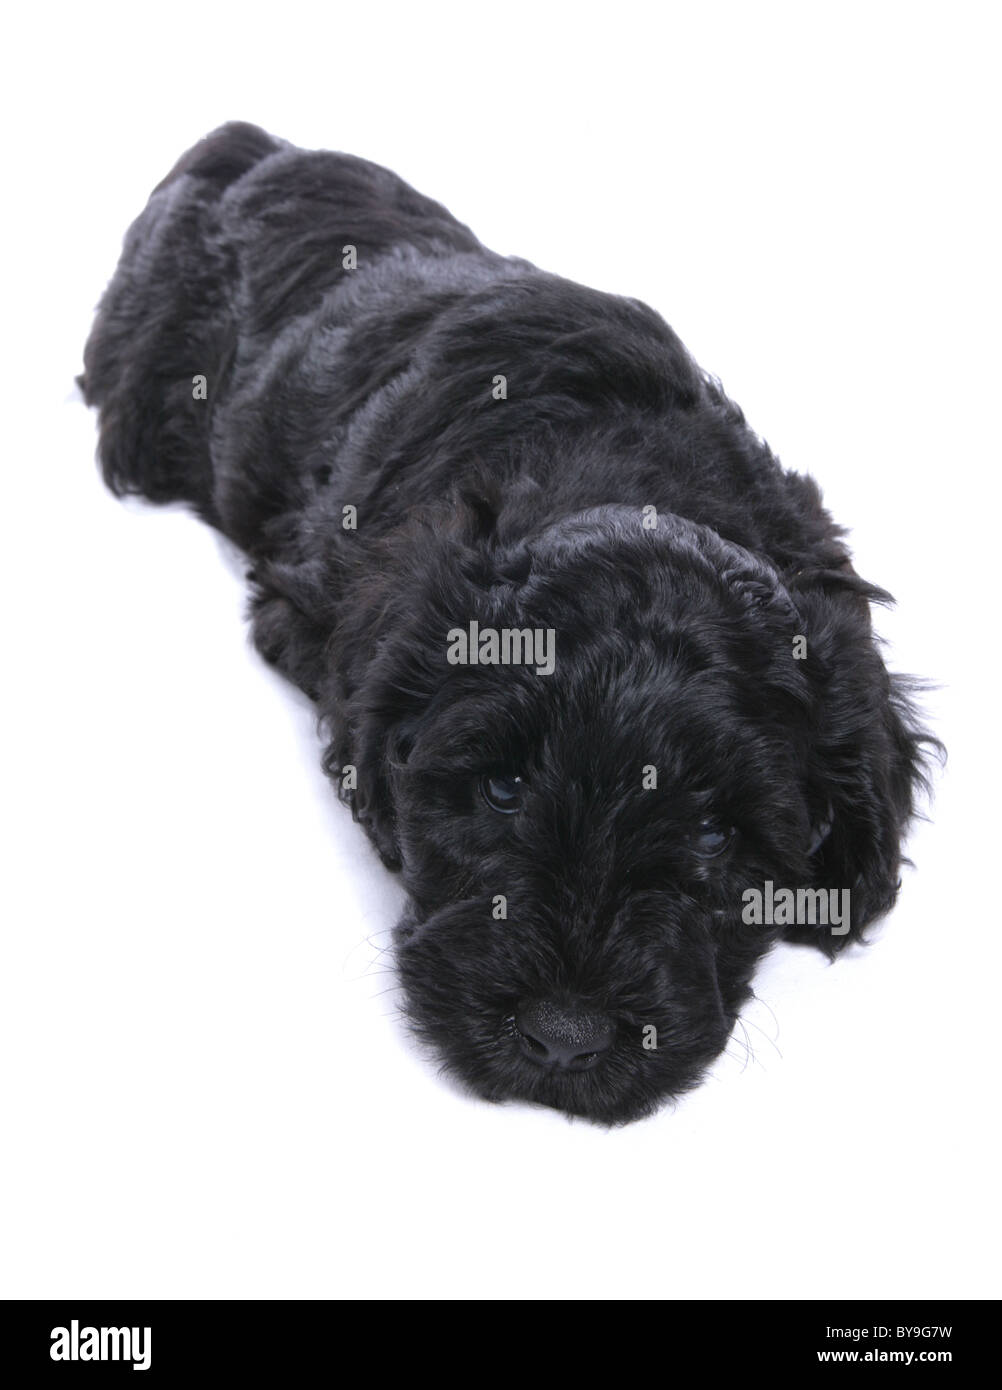 portugese water dog puppy studio portrait Stock Photo